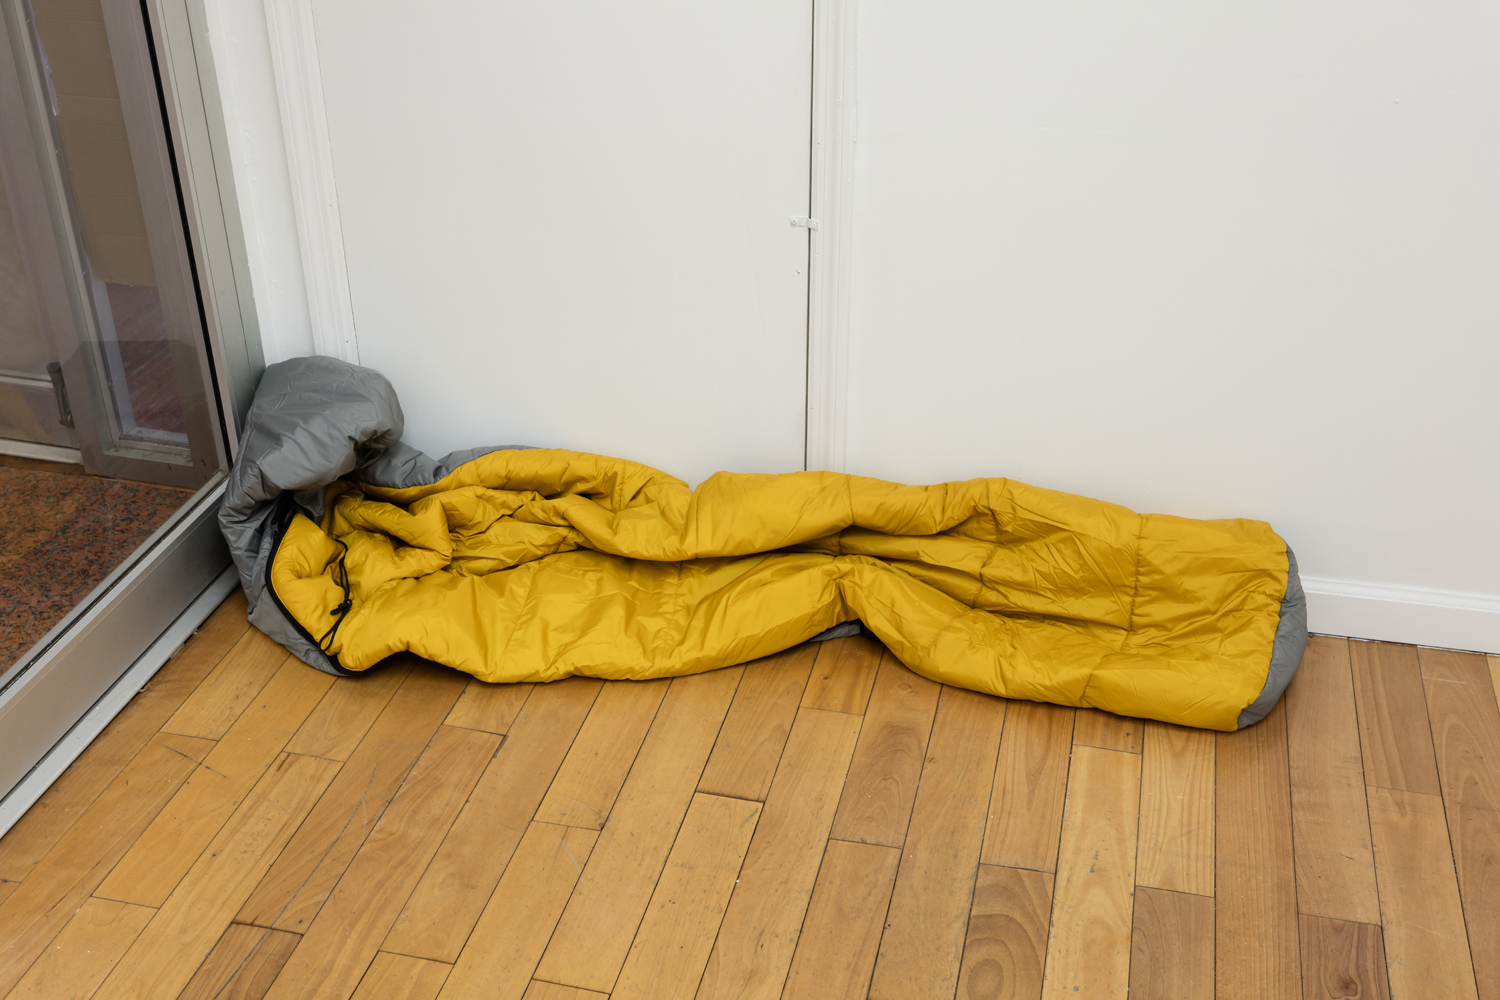  Phoebe Berglund,  The Sleeper,  2019. Nylon sleeping bag. Dimensions variable. 